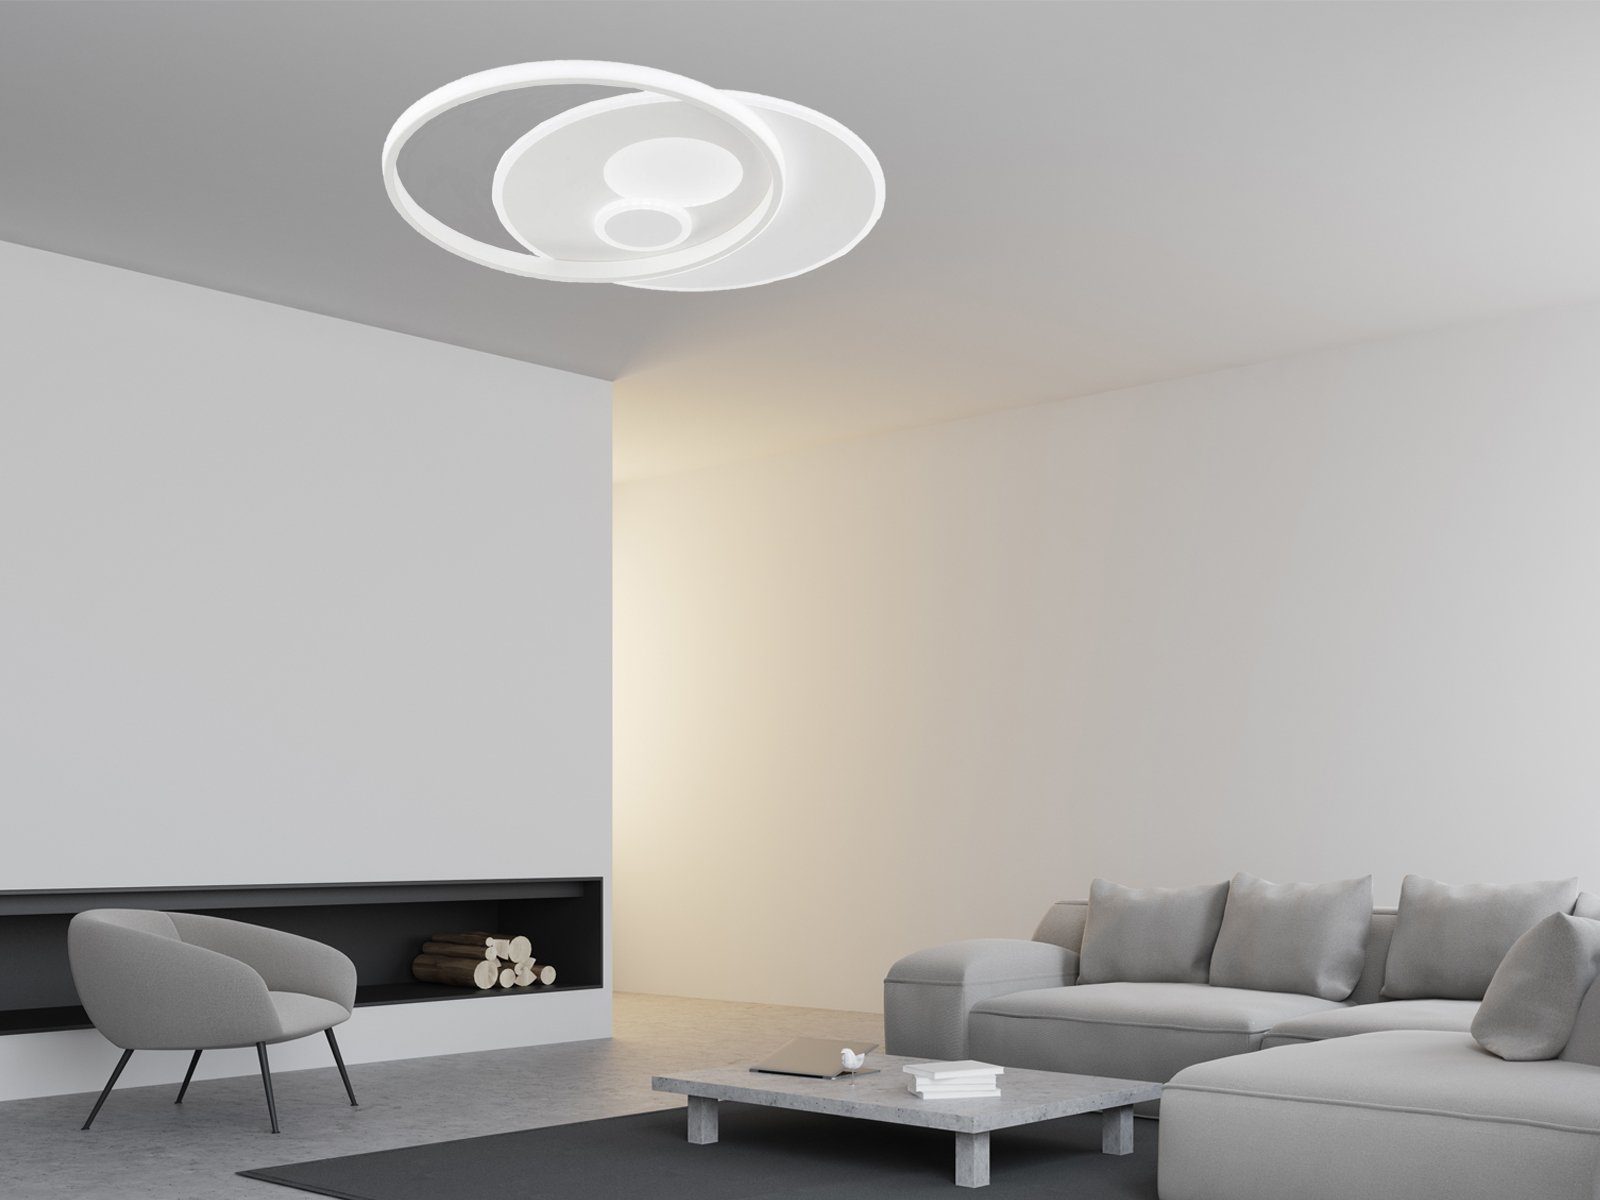 WOFI LED Deckenleuchte, Dimmer, Breite Kücheninsel integriert, flach, - Warmweiß 52cm dimmbar, Kaltweiß, LED Deckenbeleuchtung fest Weiß, Lampe